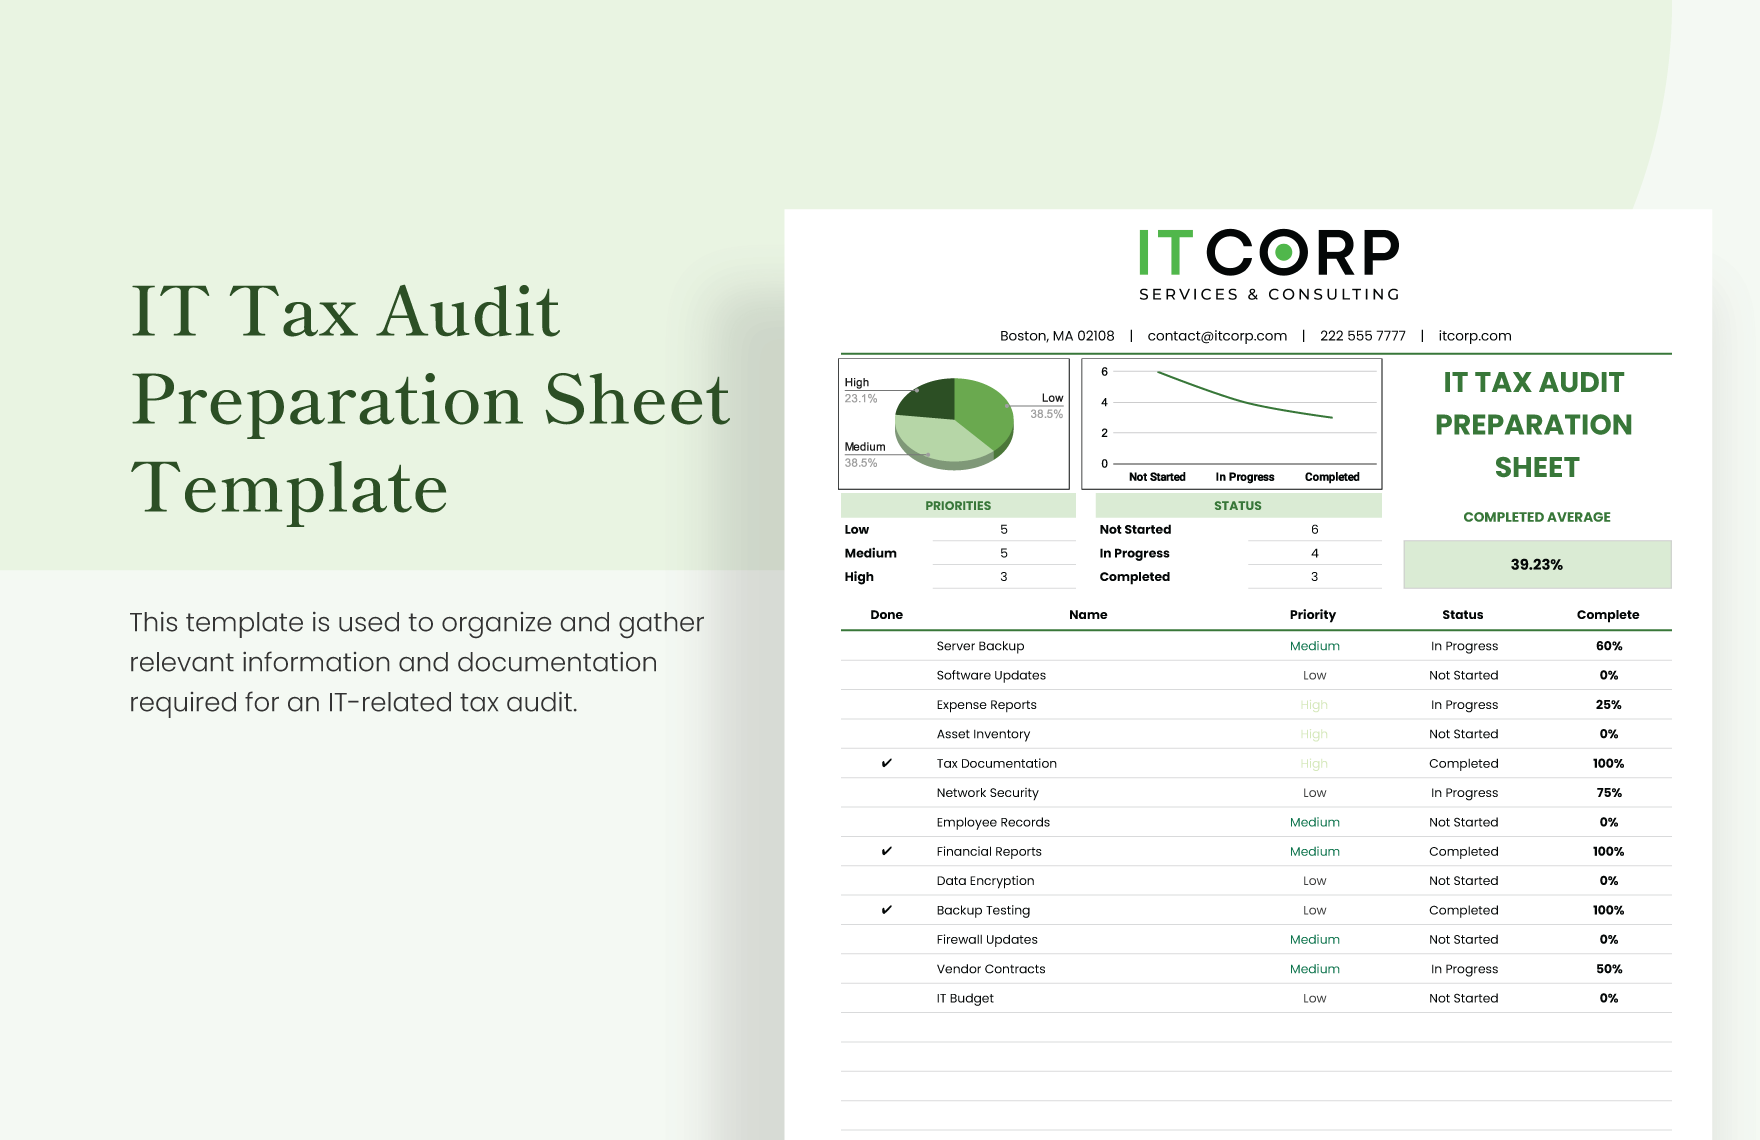 IT Tax Audit Preparation Sheet Template